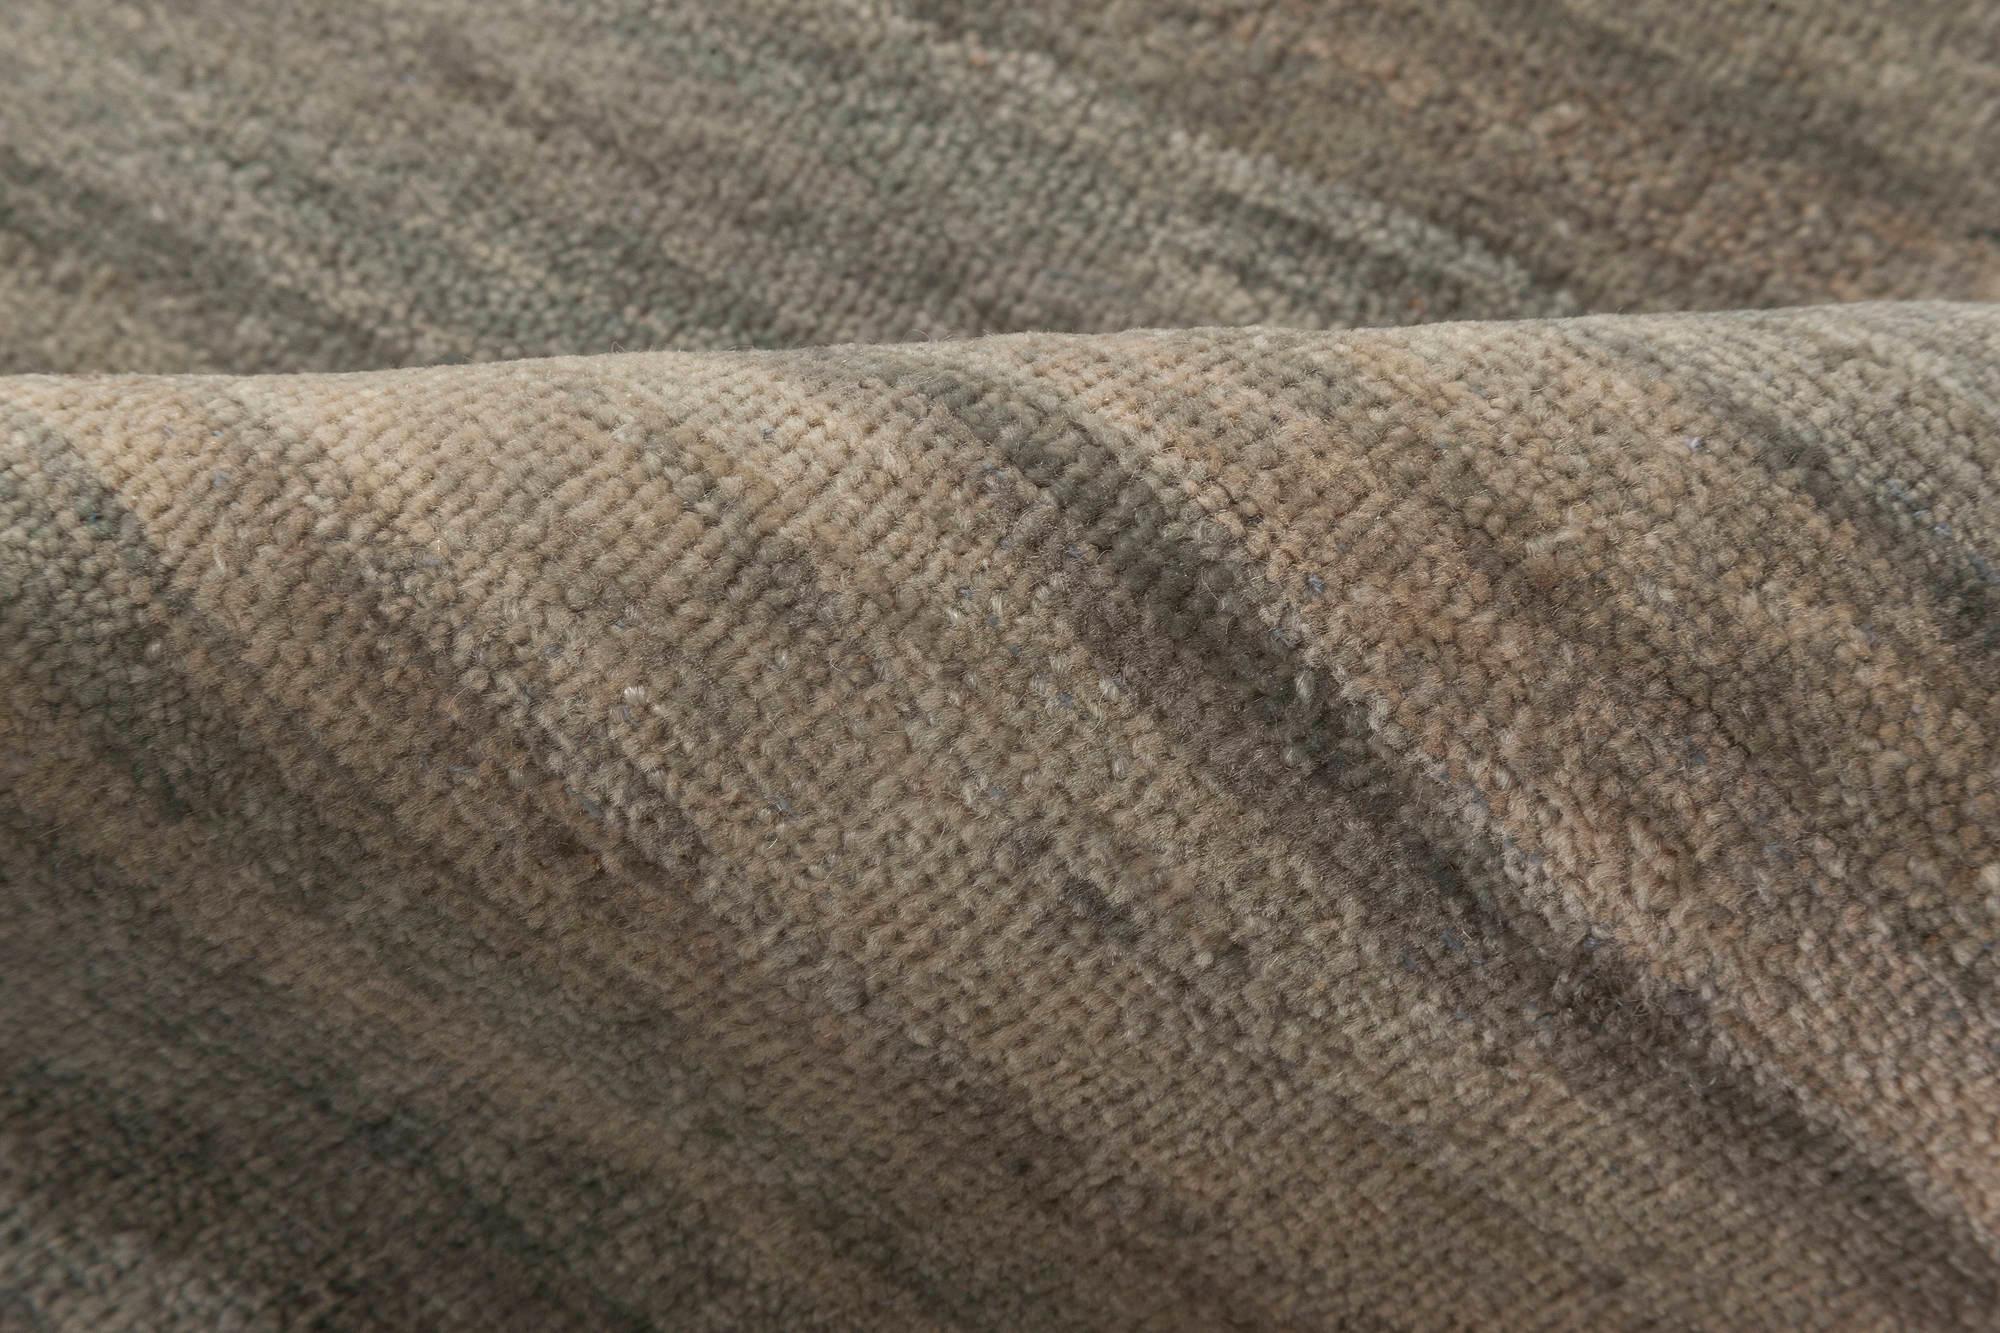 High-quality oversized contemporary grey handmade wool rug by Doris Leslie Blau.
Size: 15'0